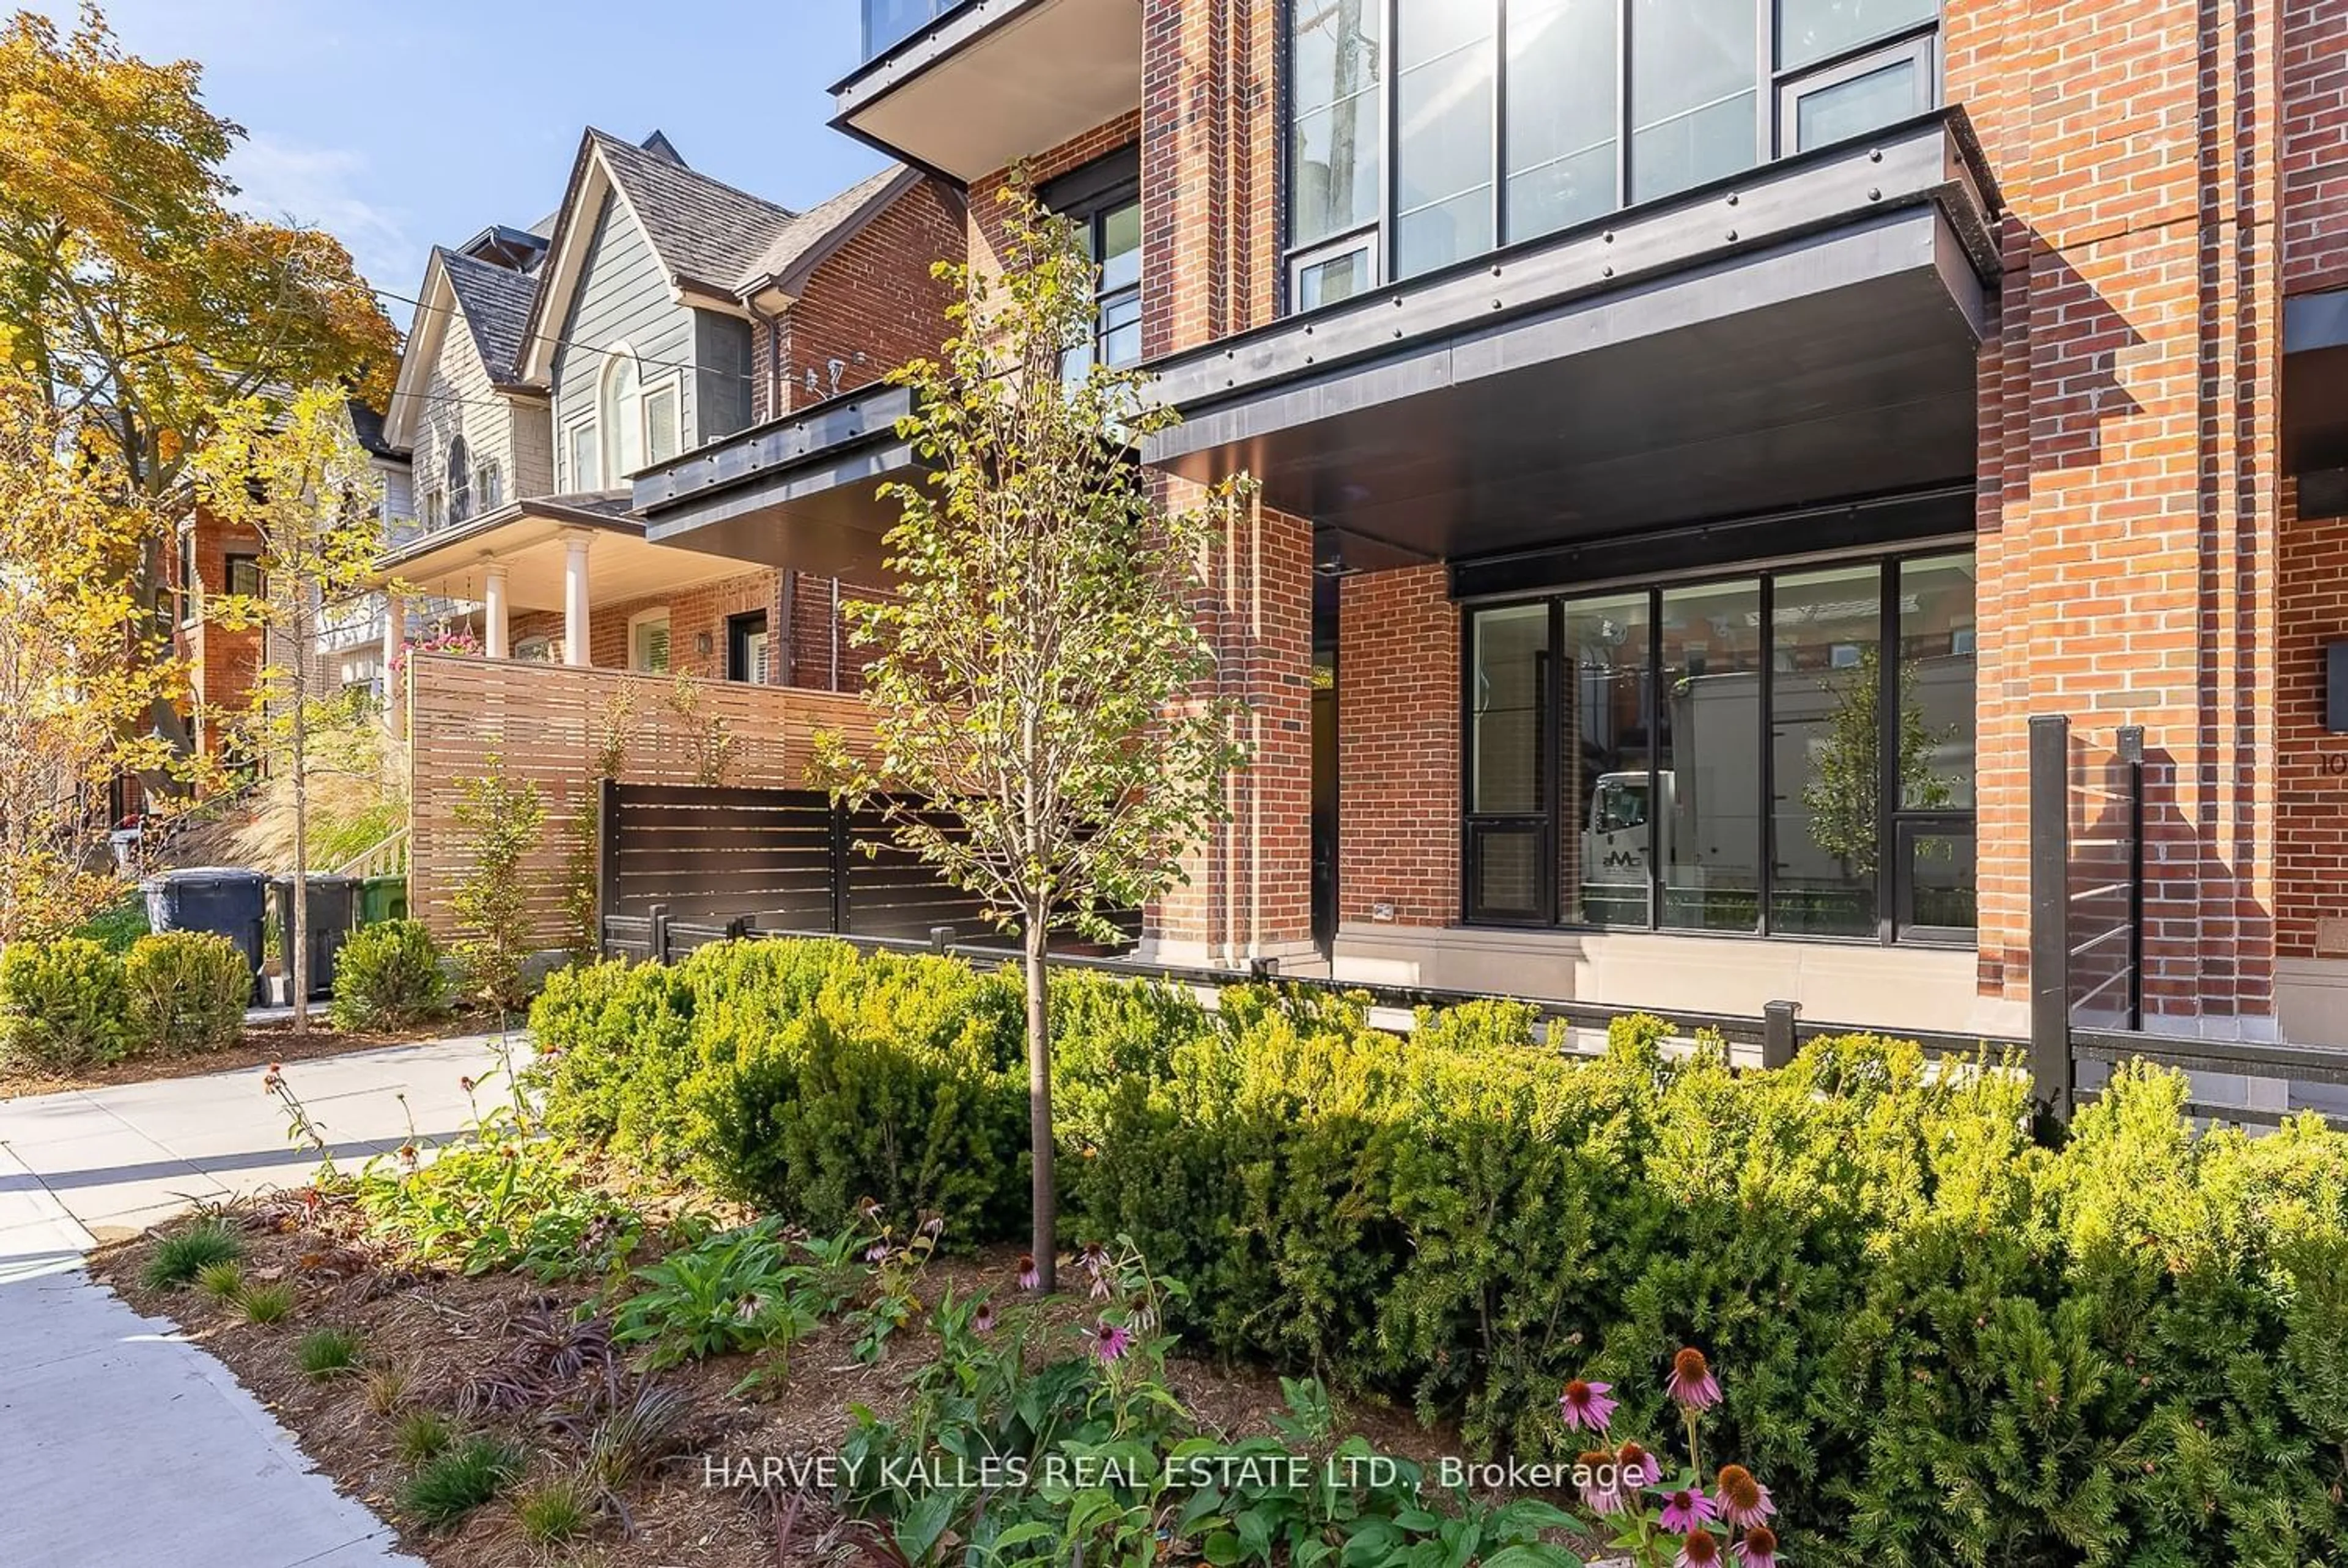 Home with brick exterior material for 36 Birch Ave #109, Toronto Ontario M4V 0B5